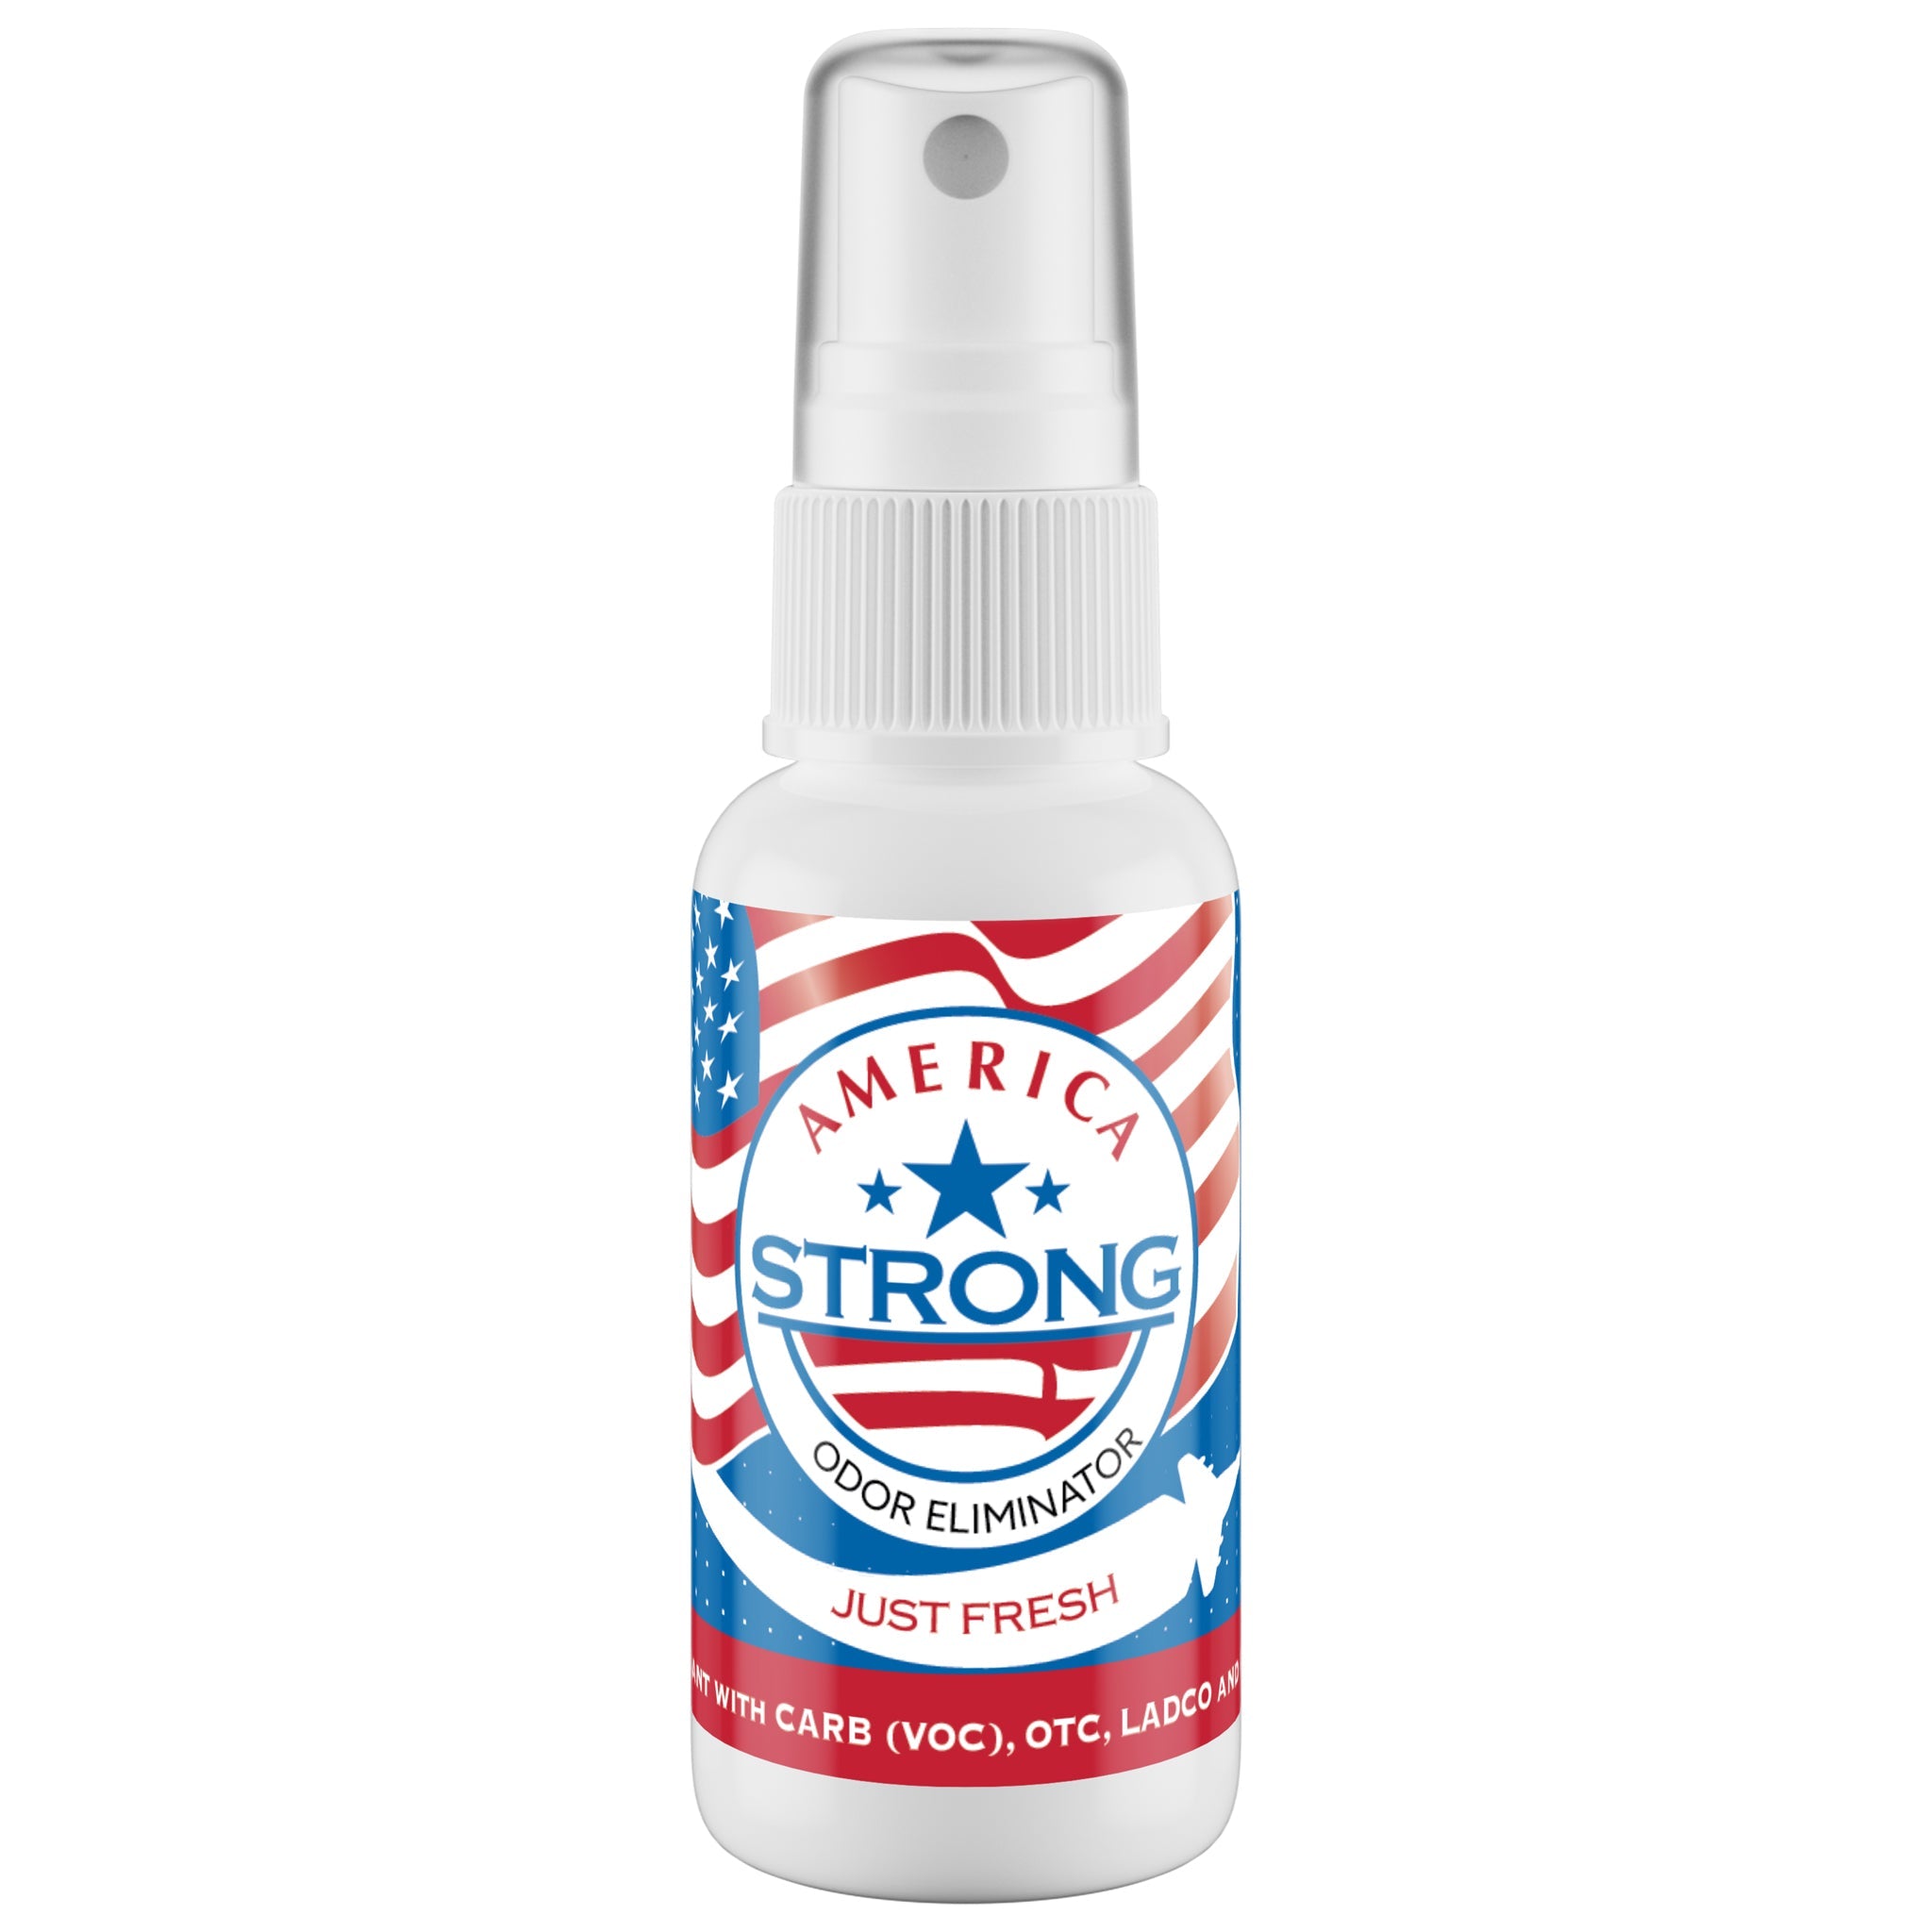 America Strong Odor Eliminator - Just Fresh Scent Size: 1.5oz